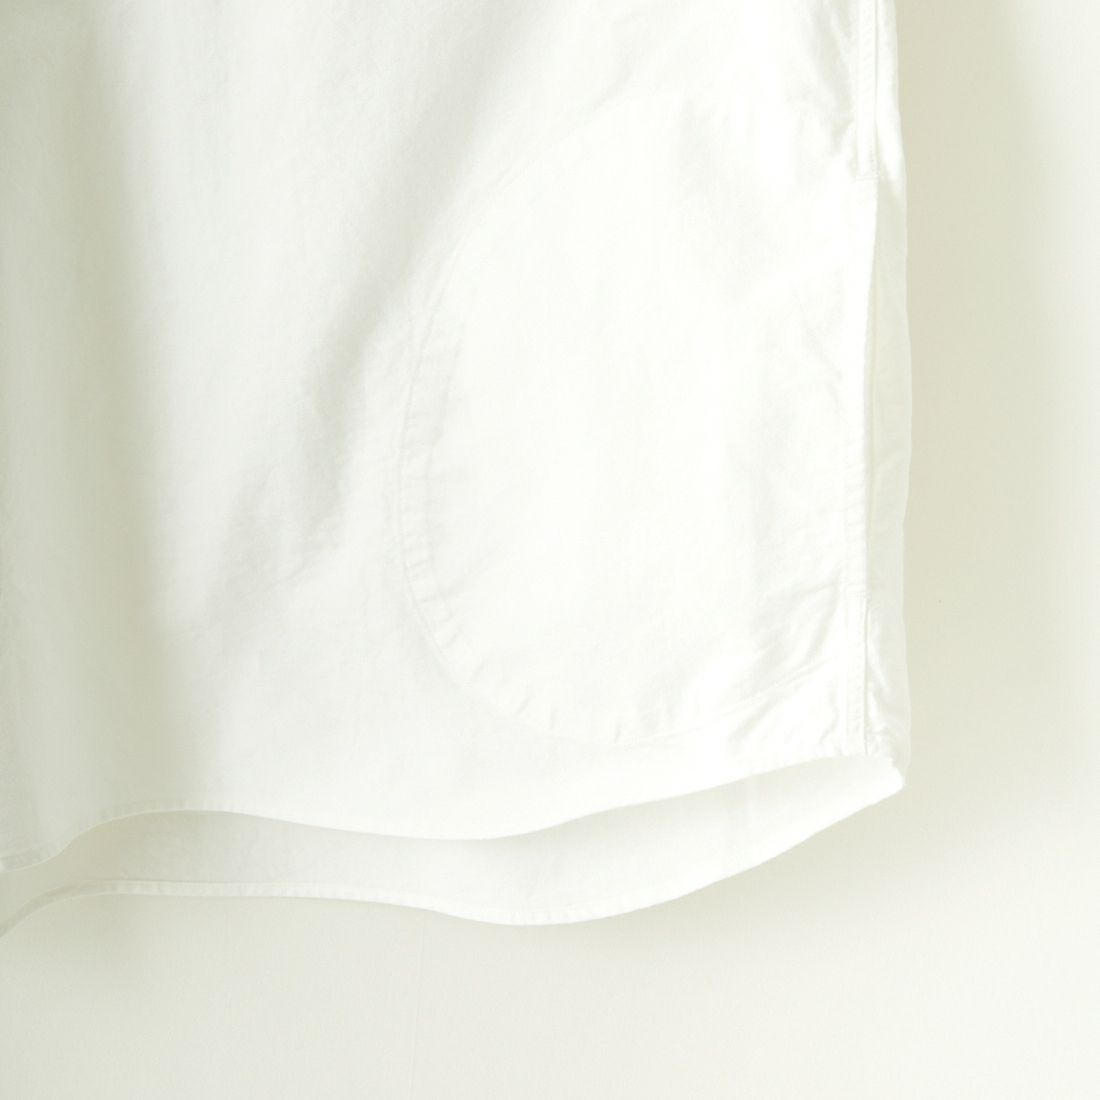 DANTON [ダントン] オックスフォード ラウンドカラーシャツ [DT-B0282SOX] WHITE